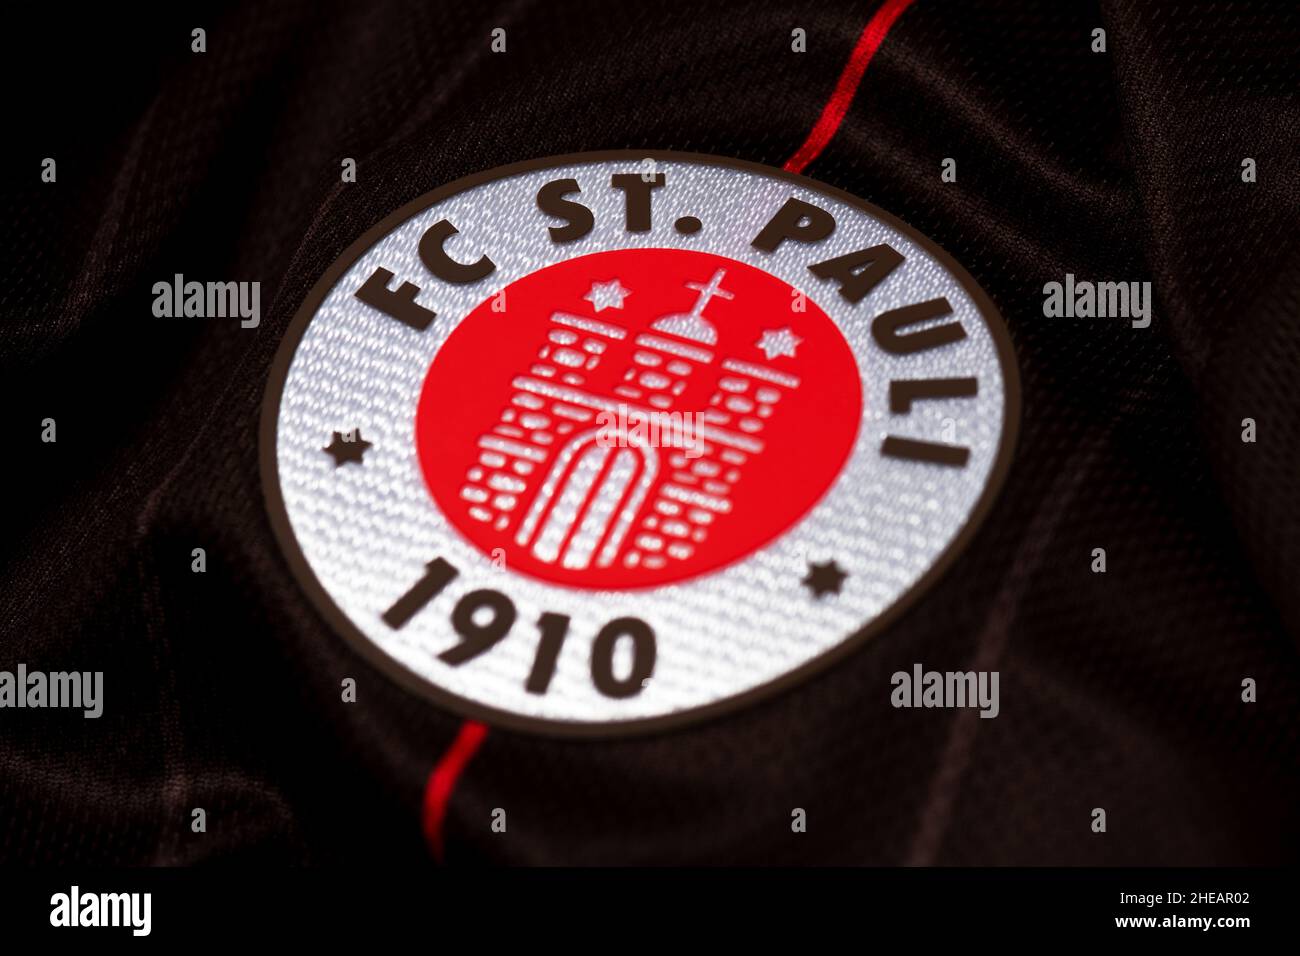 FC St. Pauli Stockfoto